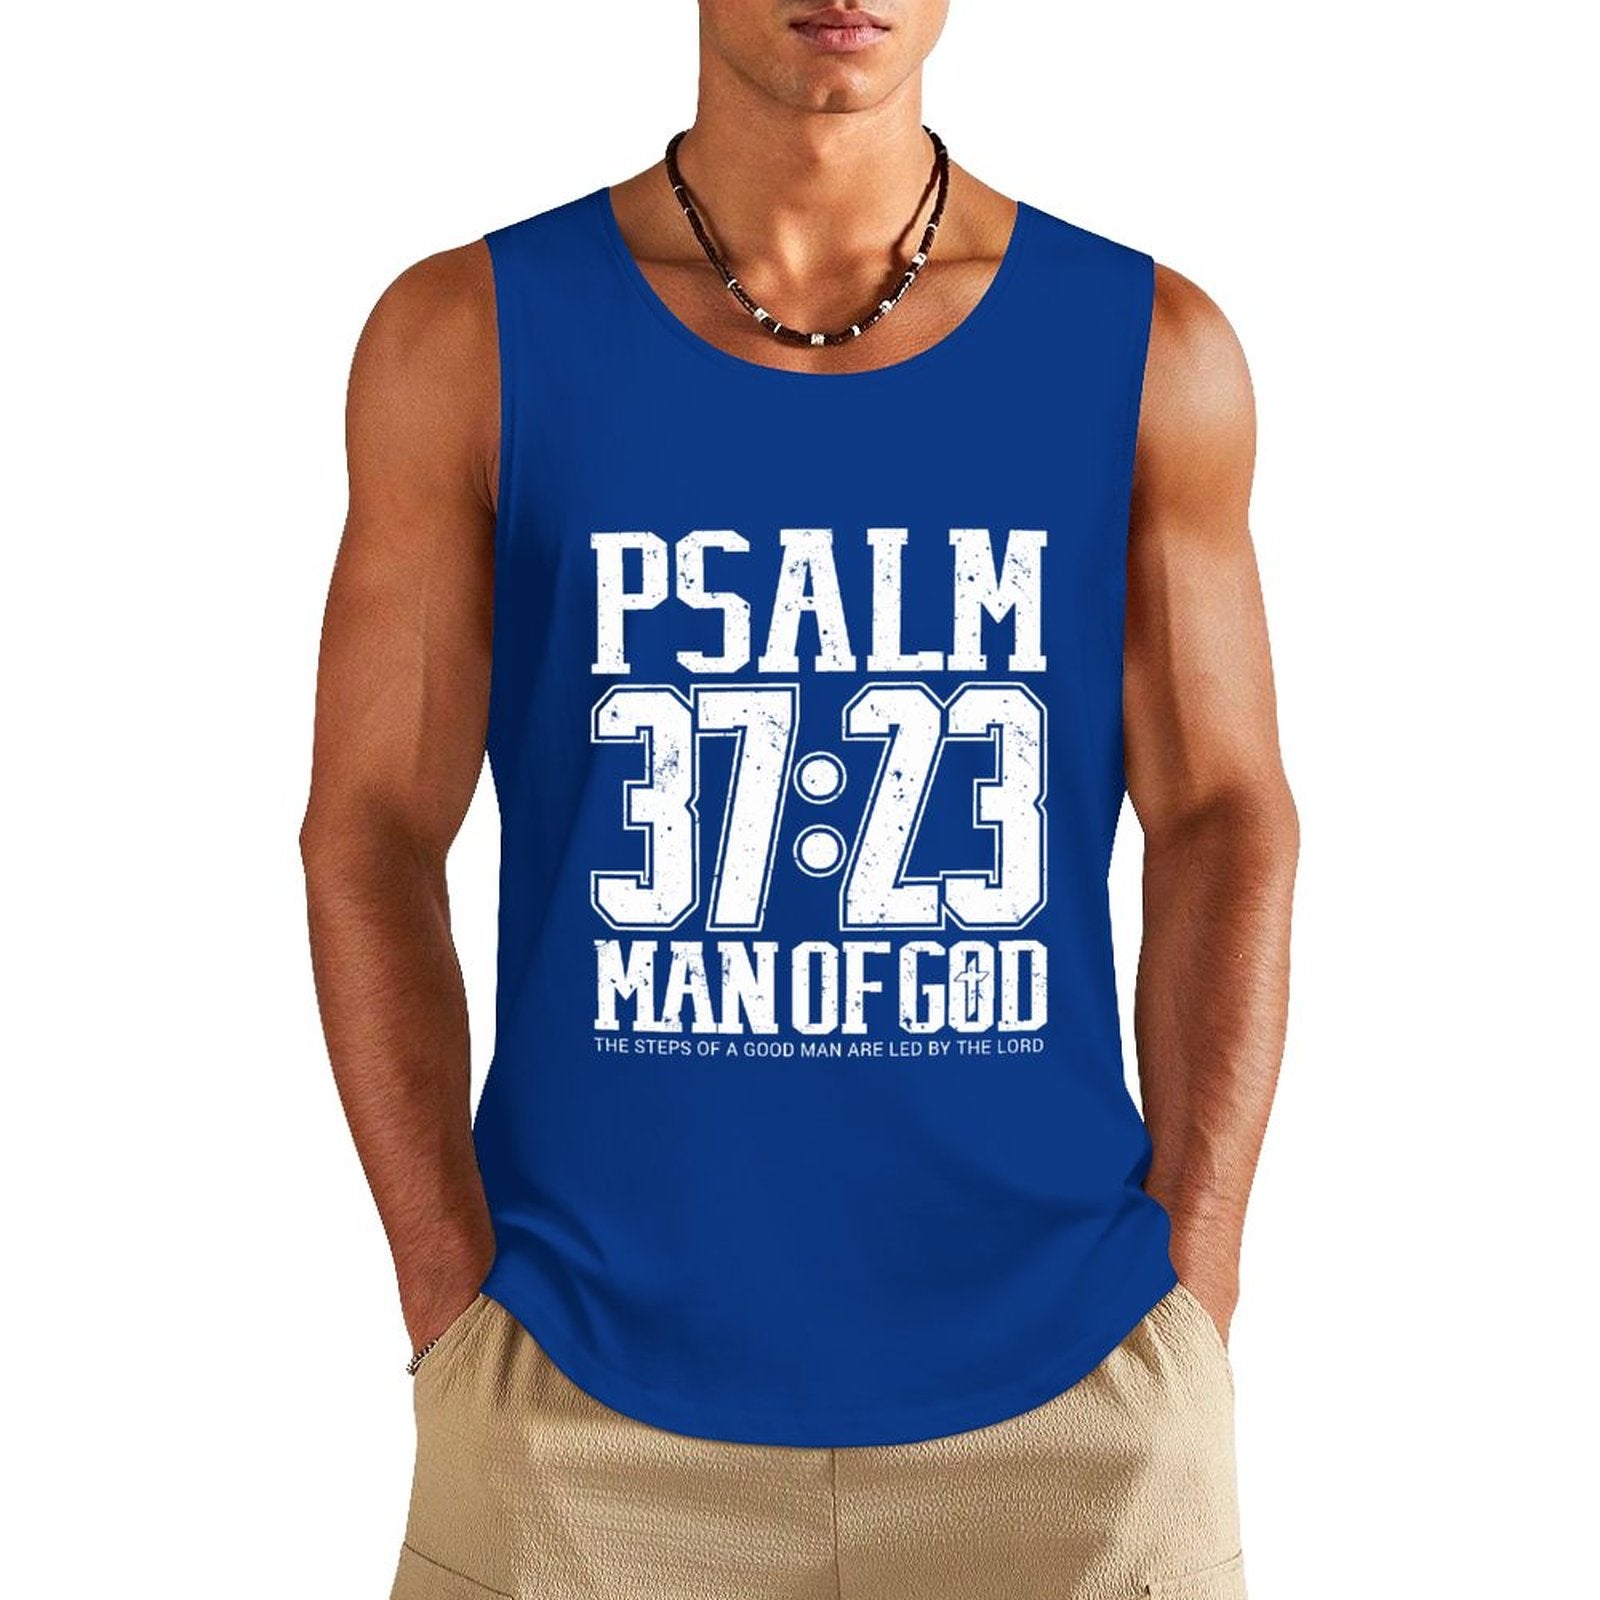 Psalm 37.23 Man Of God Men's Christian Tank Top SALE-Personal Design